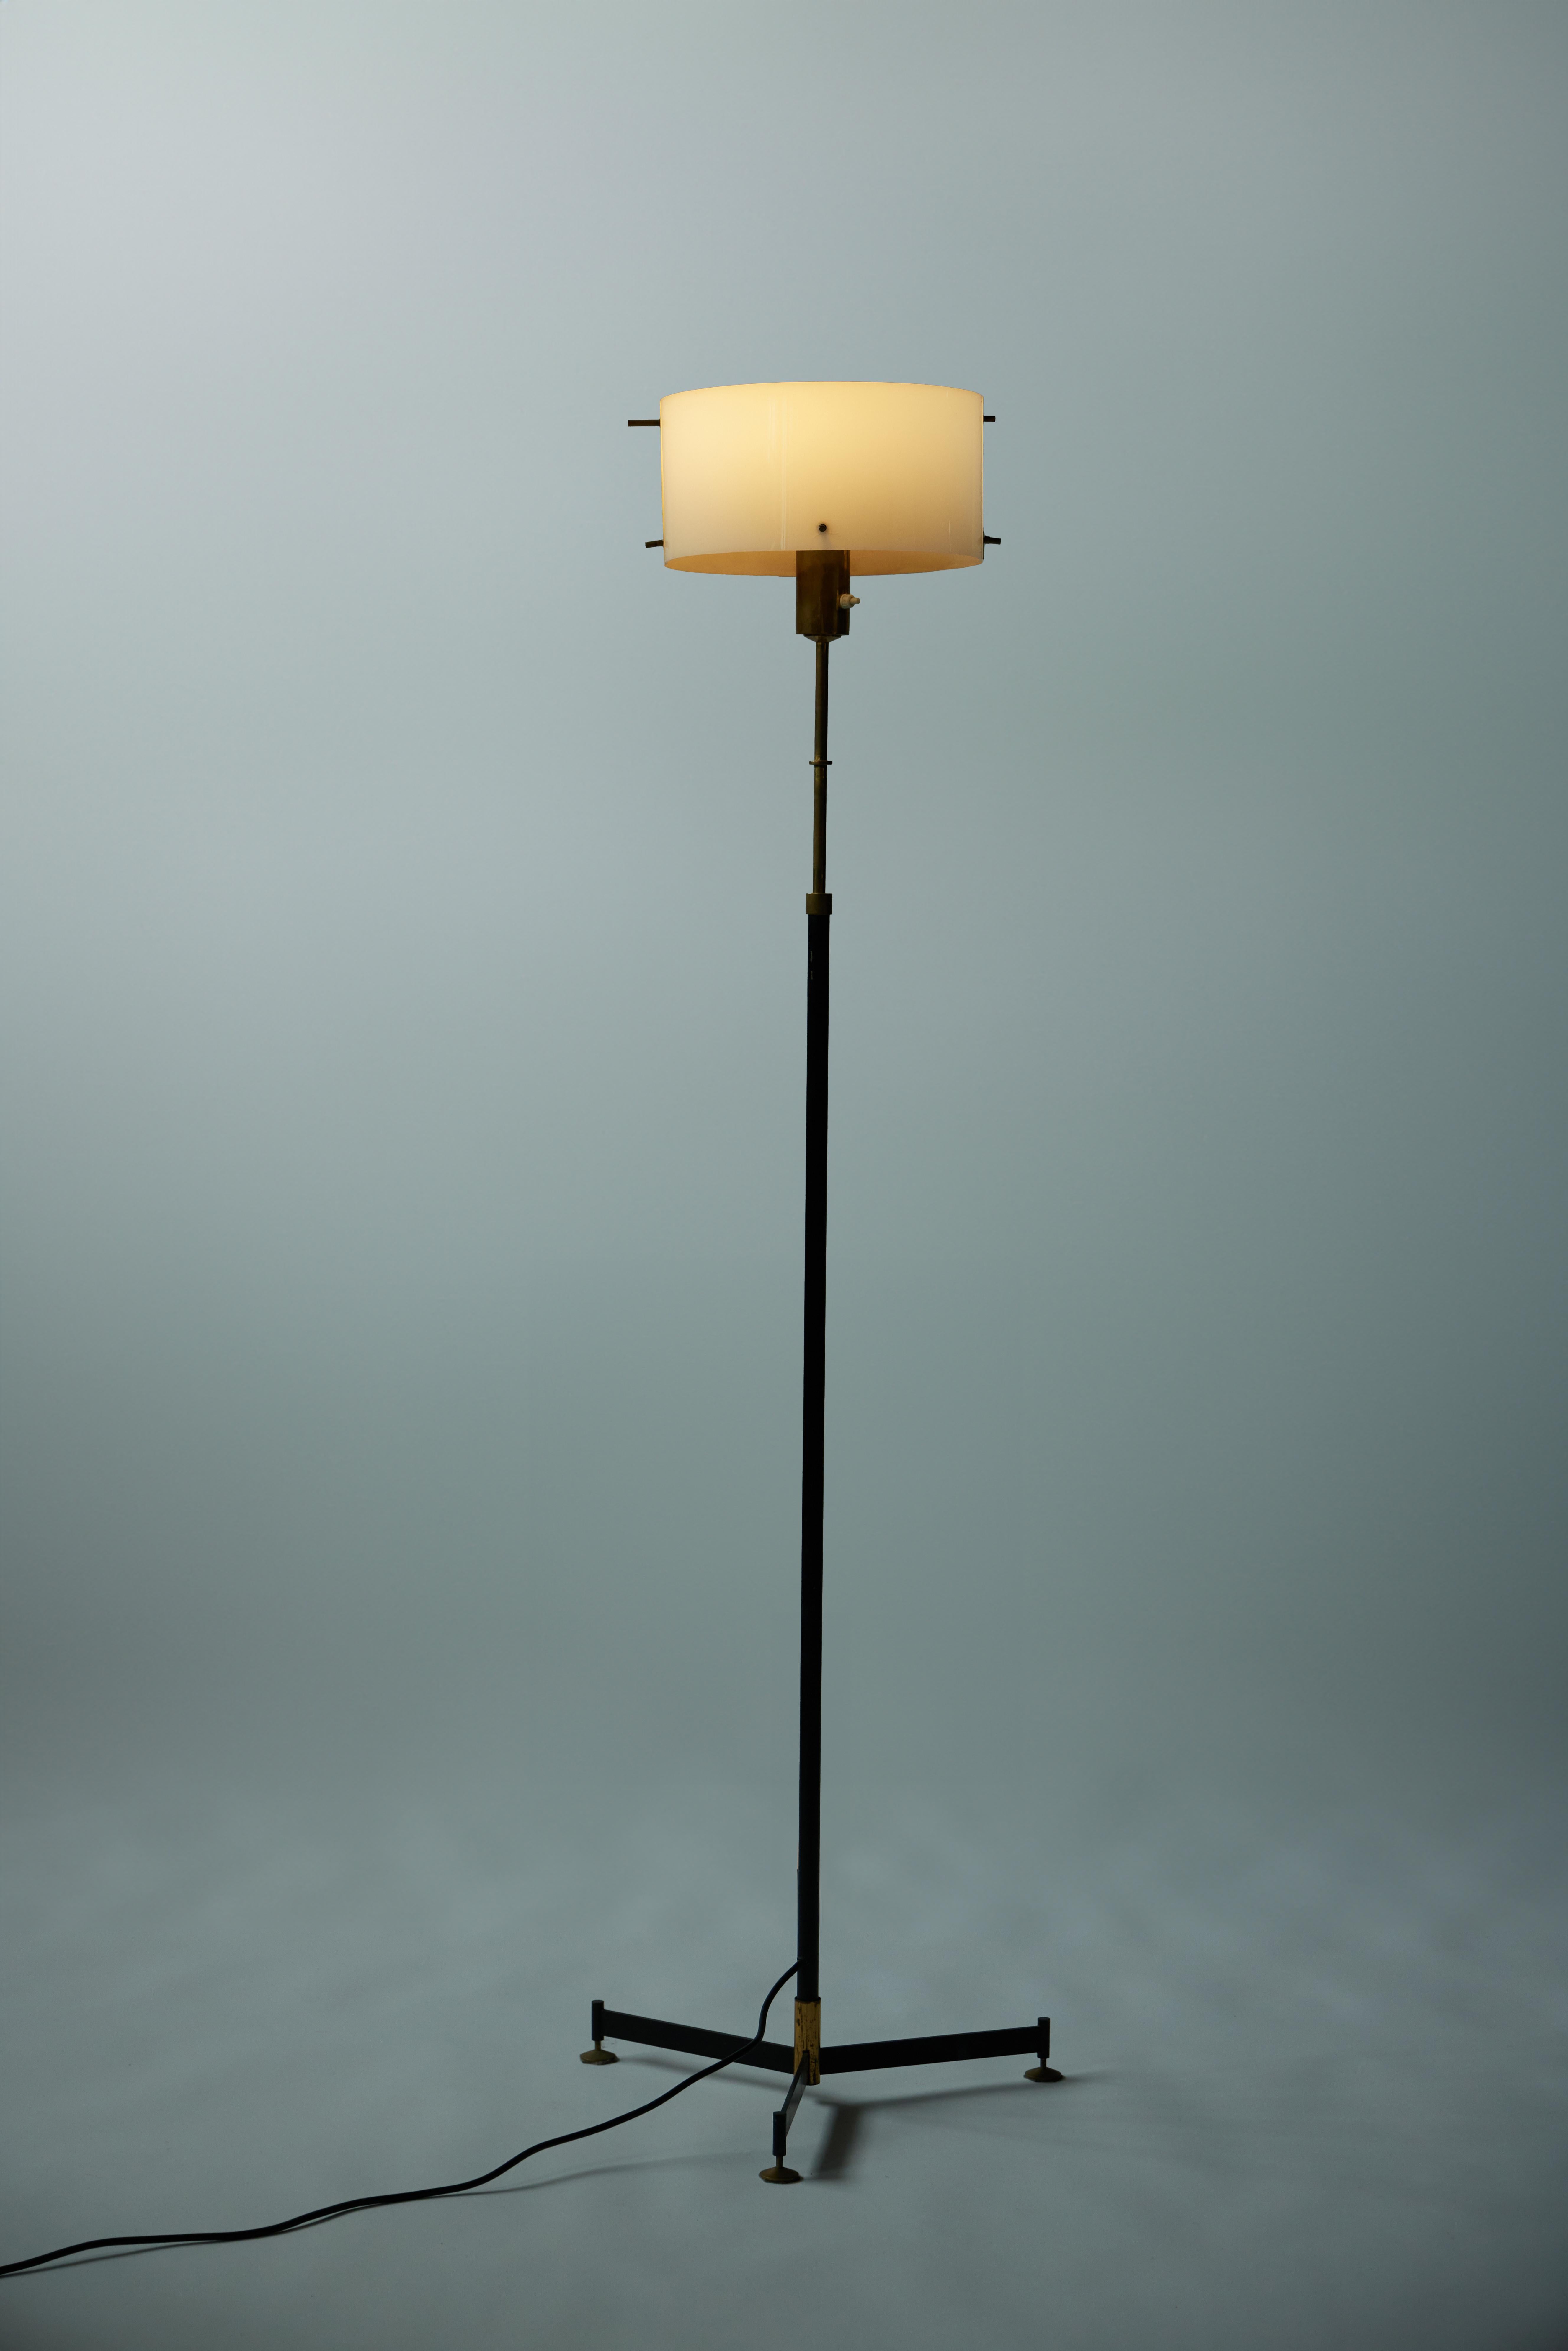 Italian Mid-Century, Modern Floor Lamp with Adjustable Height by Stilnovo, 1950s For Sale 6